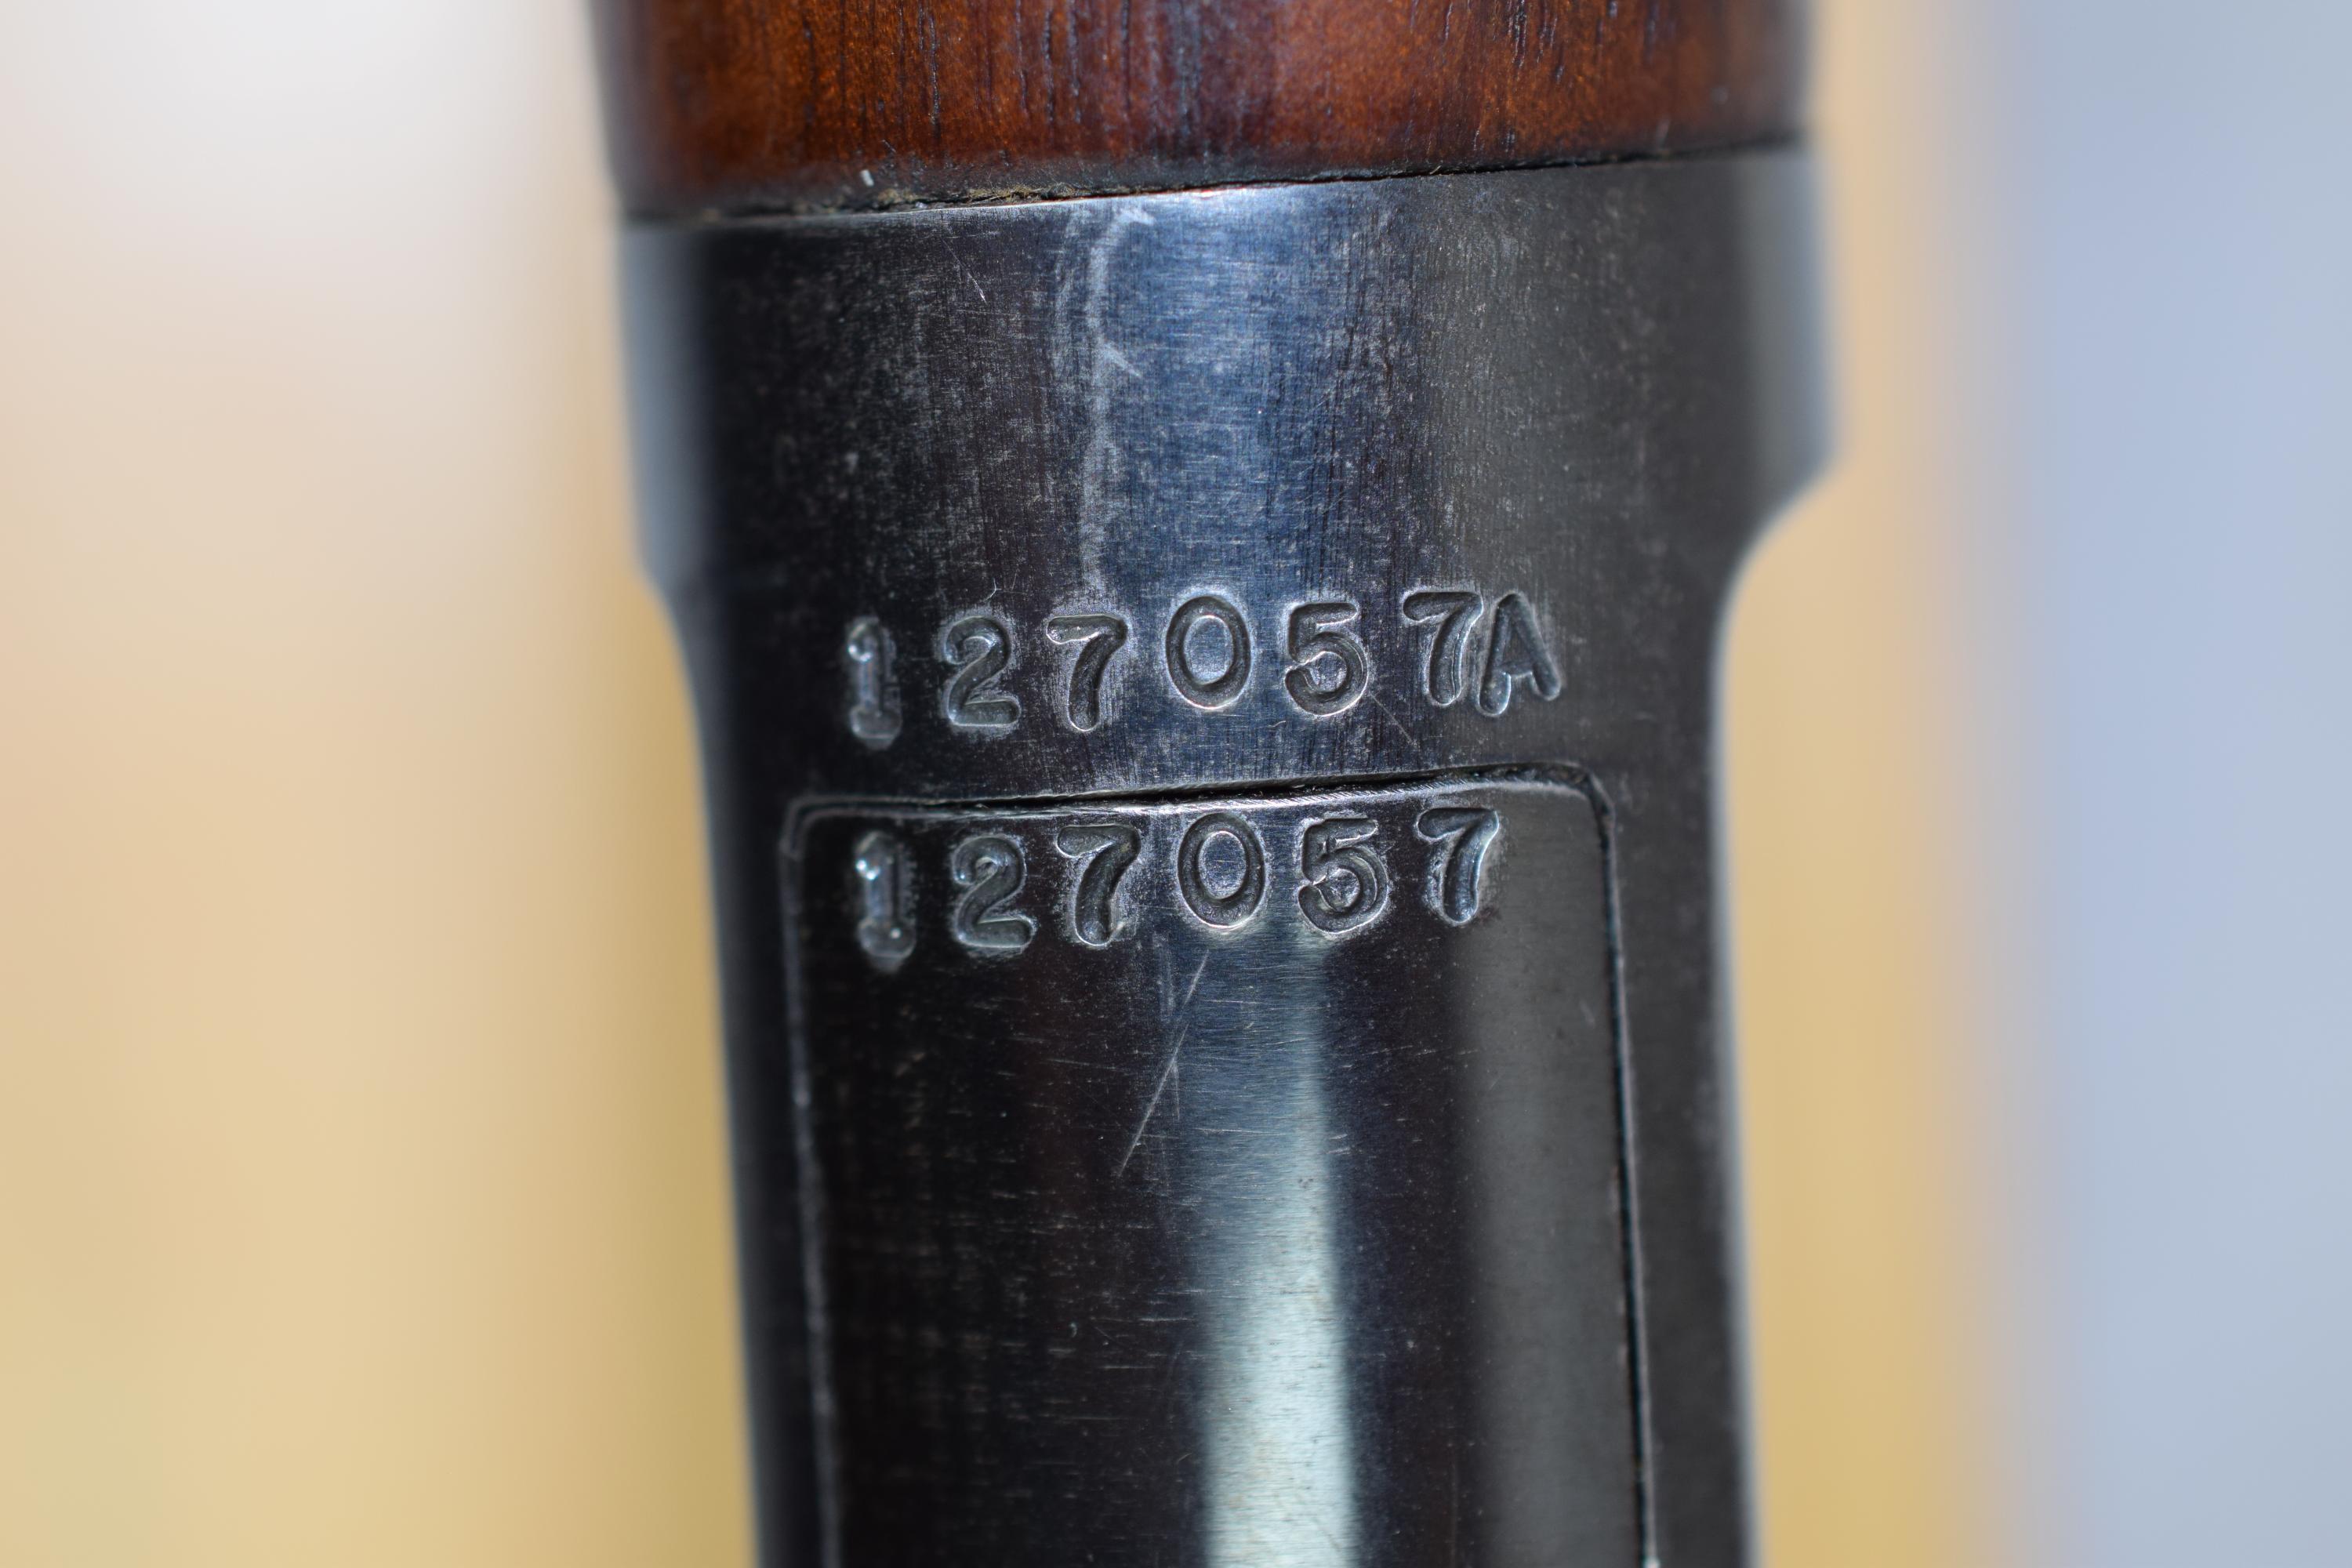 Winchester  Mod 63  Cal .22LR